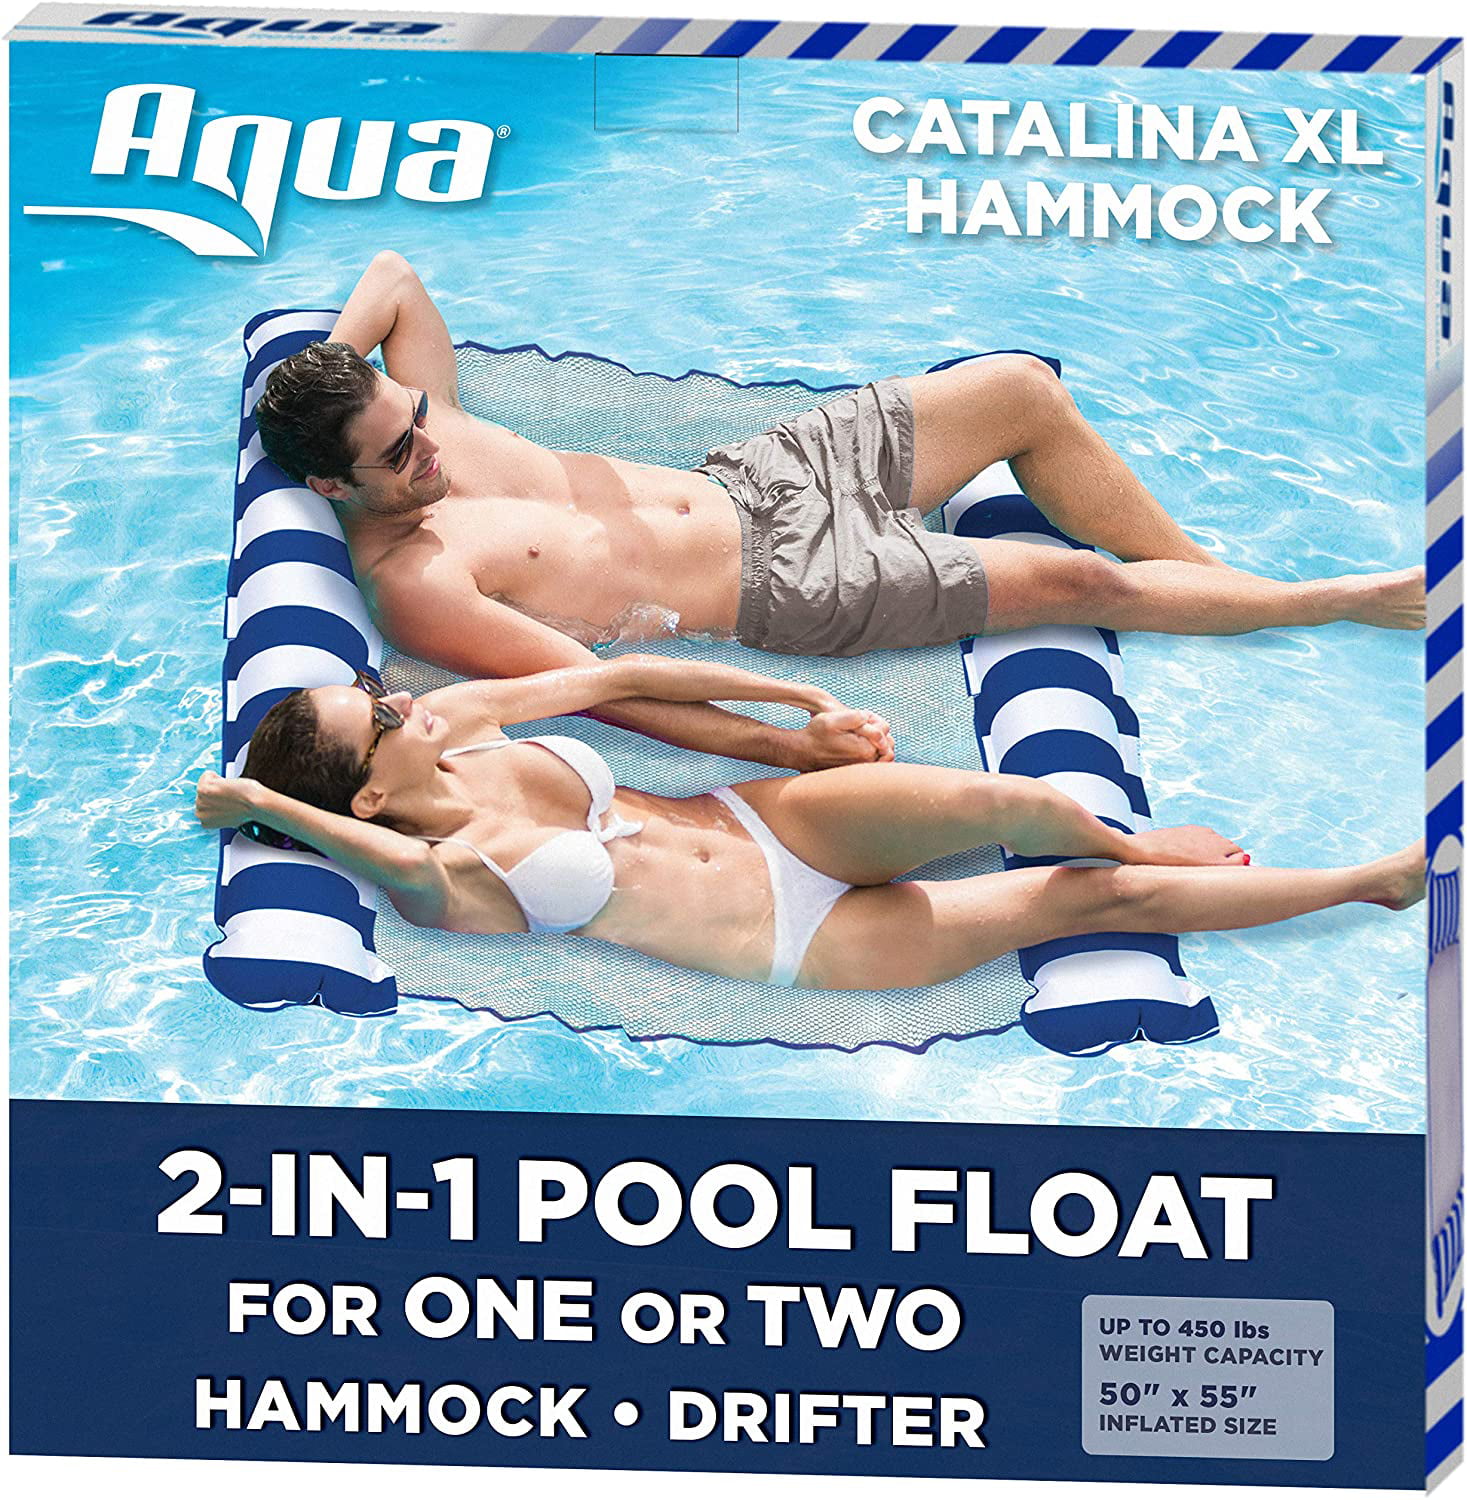 Water Lounge Aqua Catalina XL Hammock Teal/White Stripe 4-in-1 Multi-Purpose Inflatable 1-2 Person Pool Float 